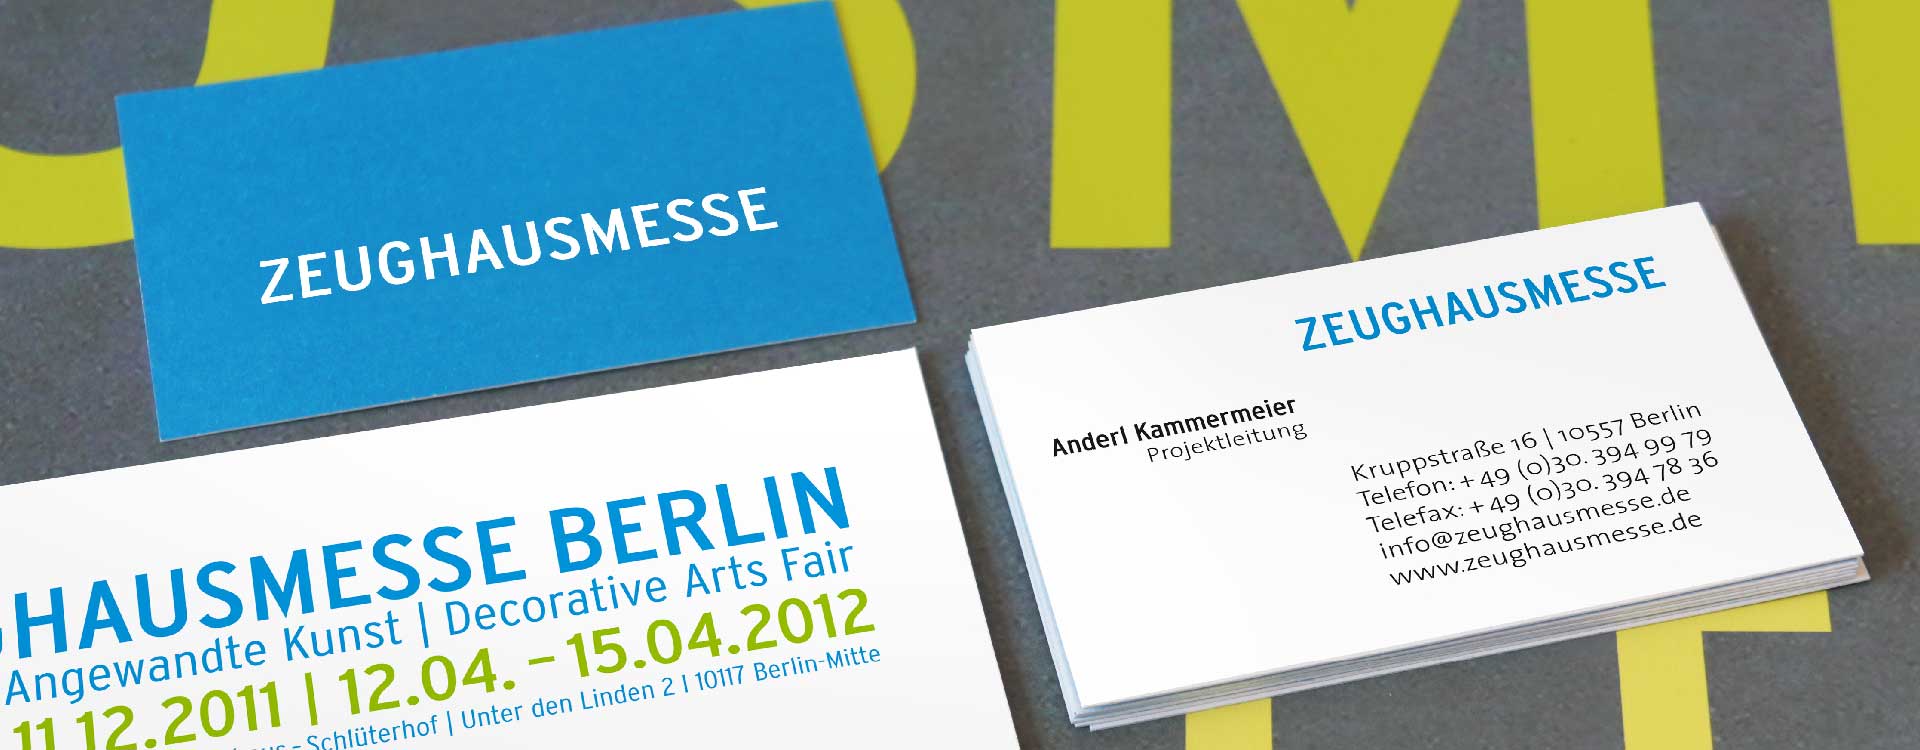 Business card and mailing card of Zeughausmesse; Design: Kattrin Richter | Graphic Design Studio